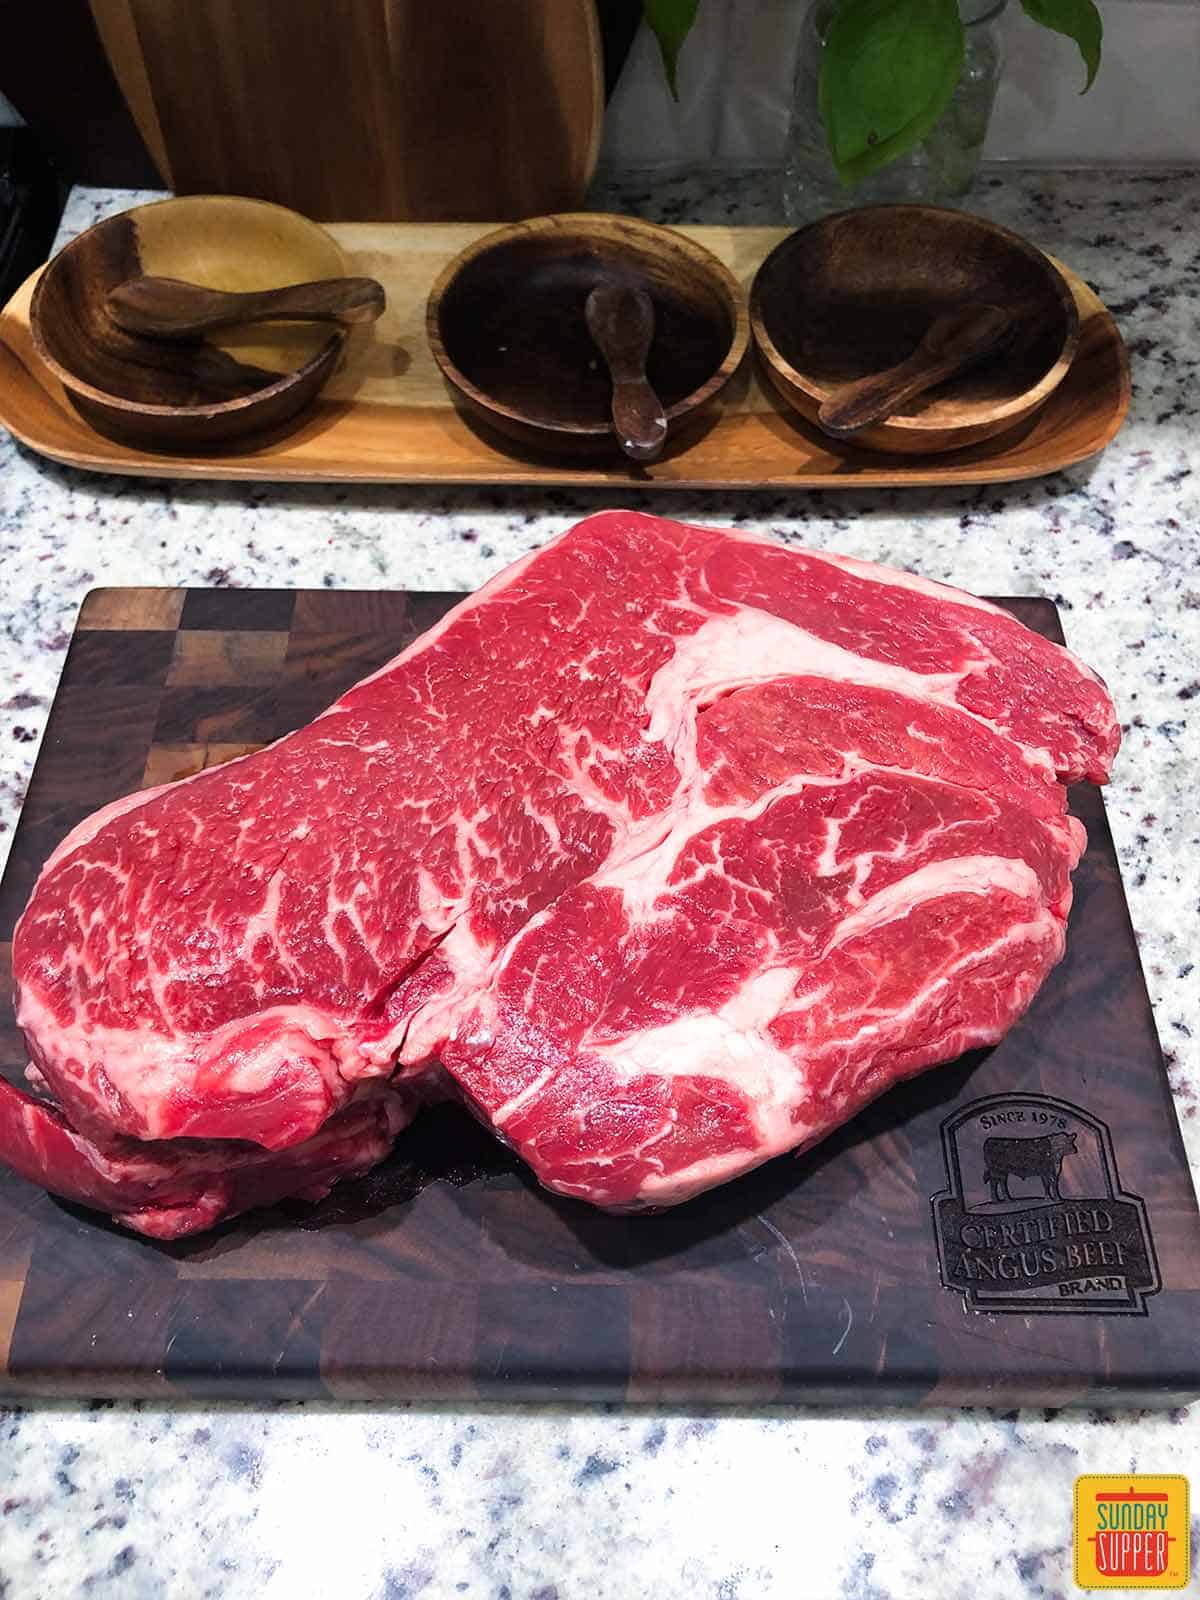 Beautifully marbled beef chuck roast on a cutting board